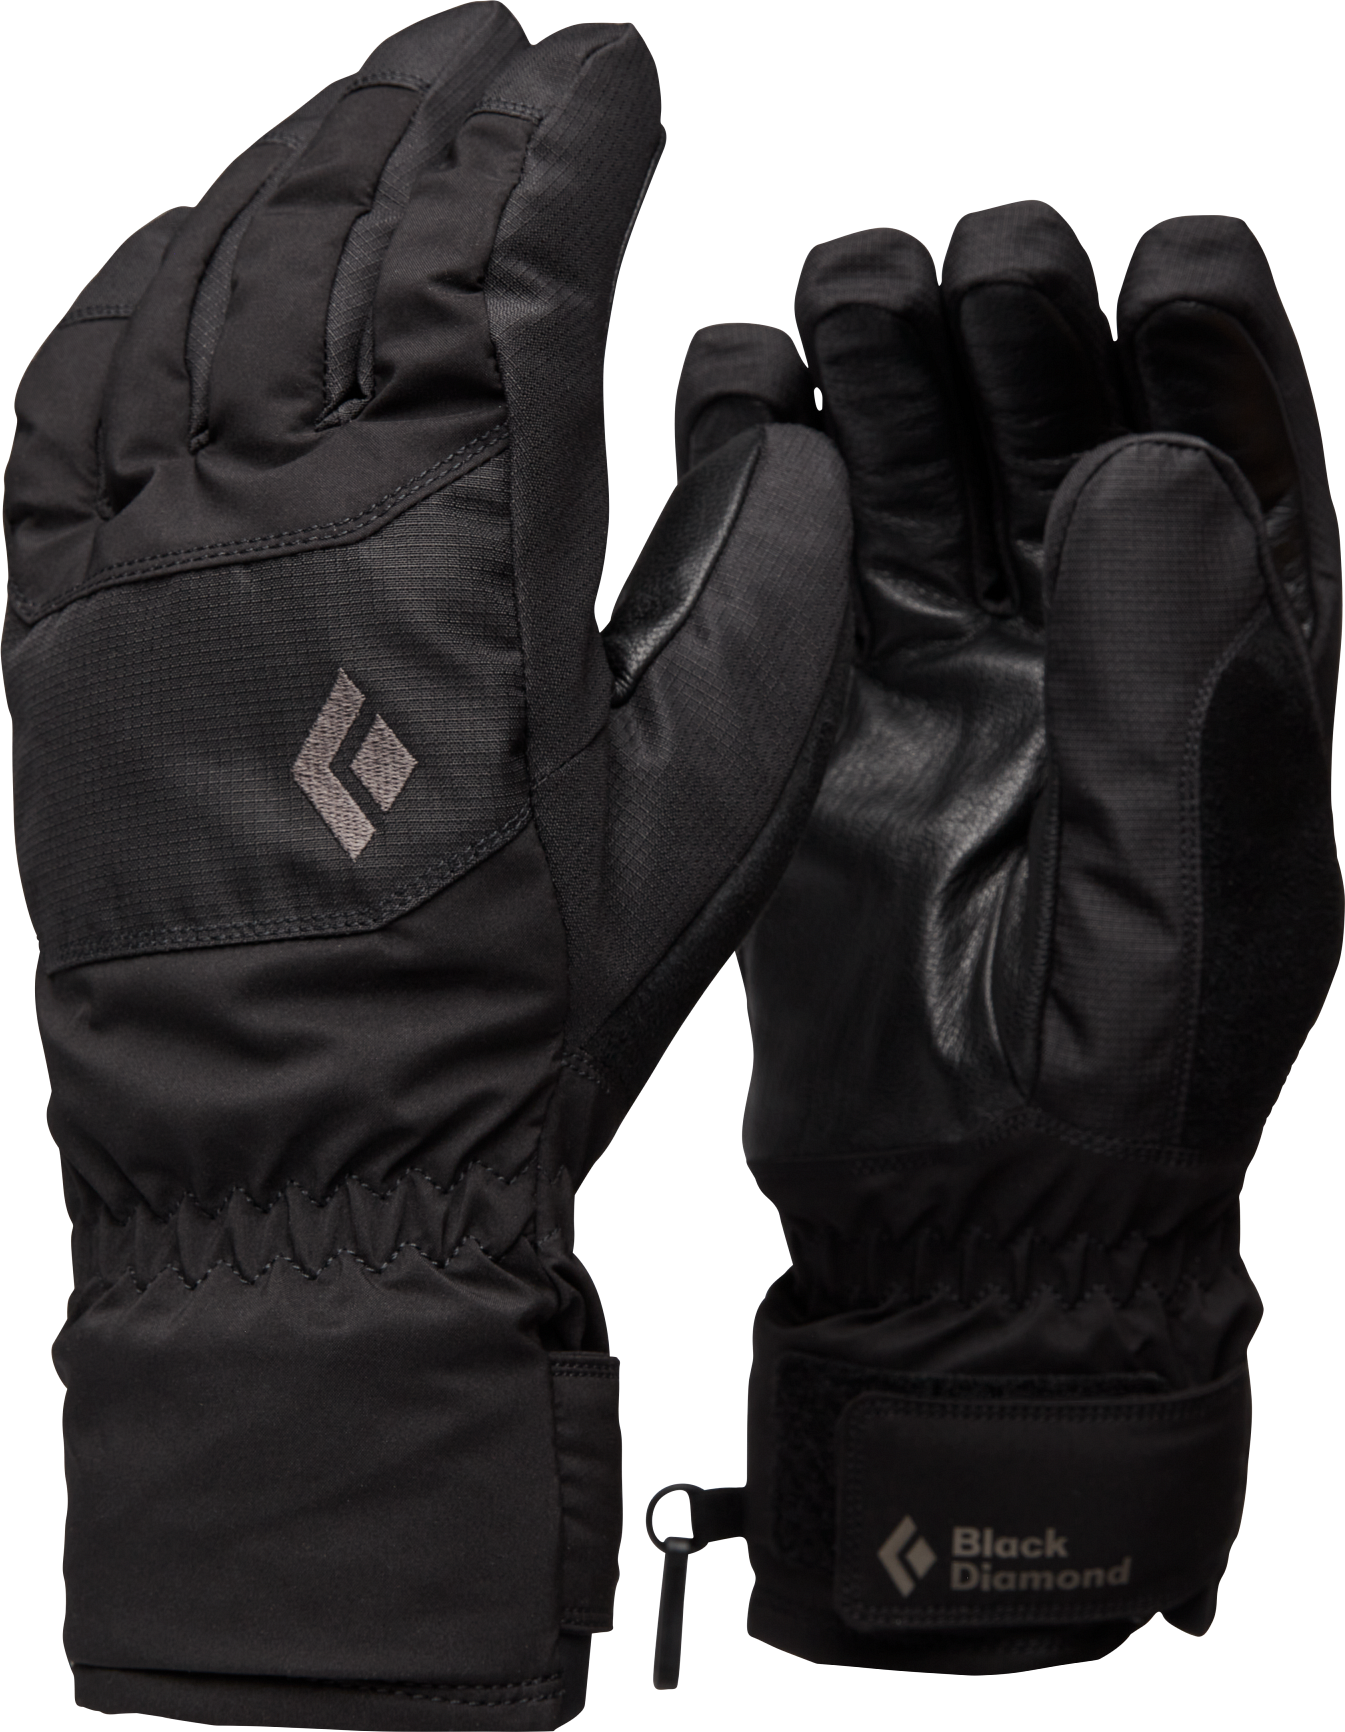 Black Diamond Men’s Mission Lt Gloves Black